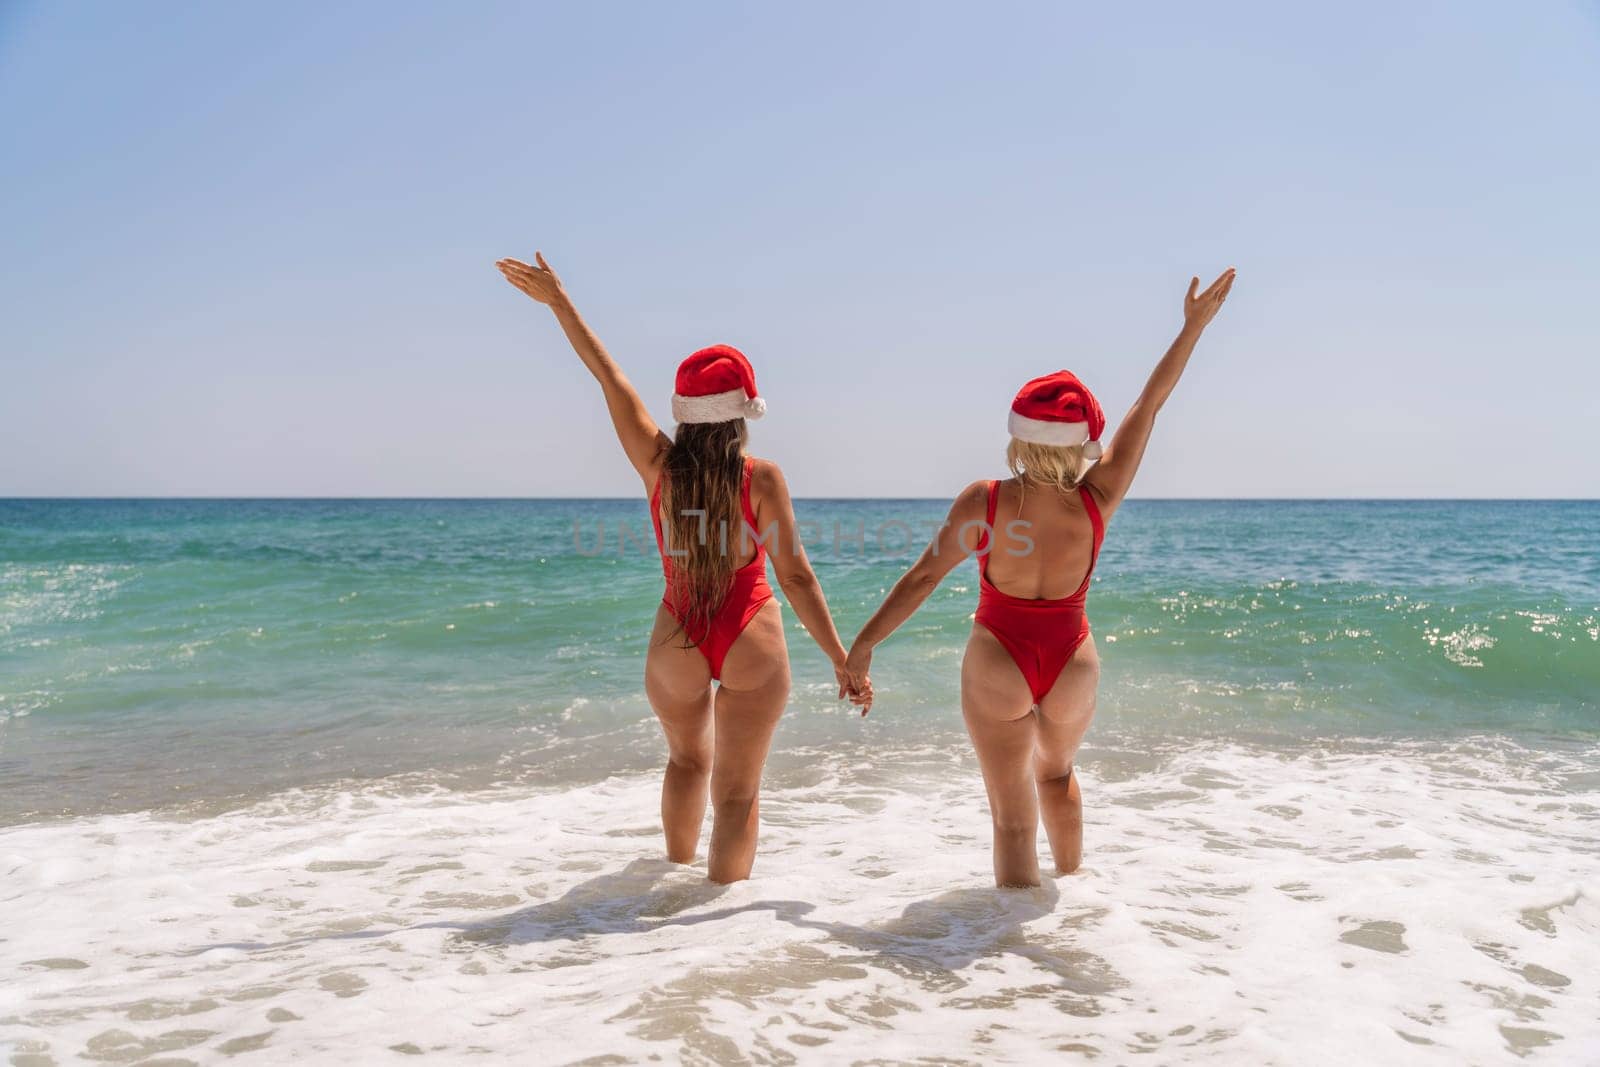 Women Santa hats ocean play. Seaside, beach daytime, enjoying beach fun. Two women in red swimsuits and Santa hats are enjoying themselves in the ocean waves and raising their hands up